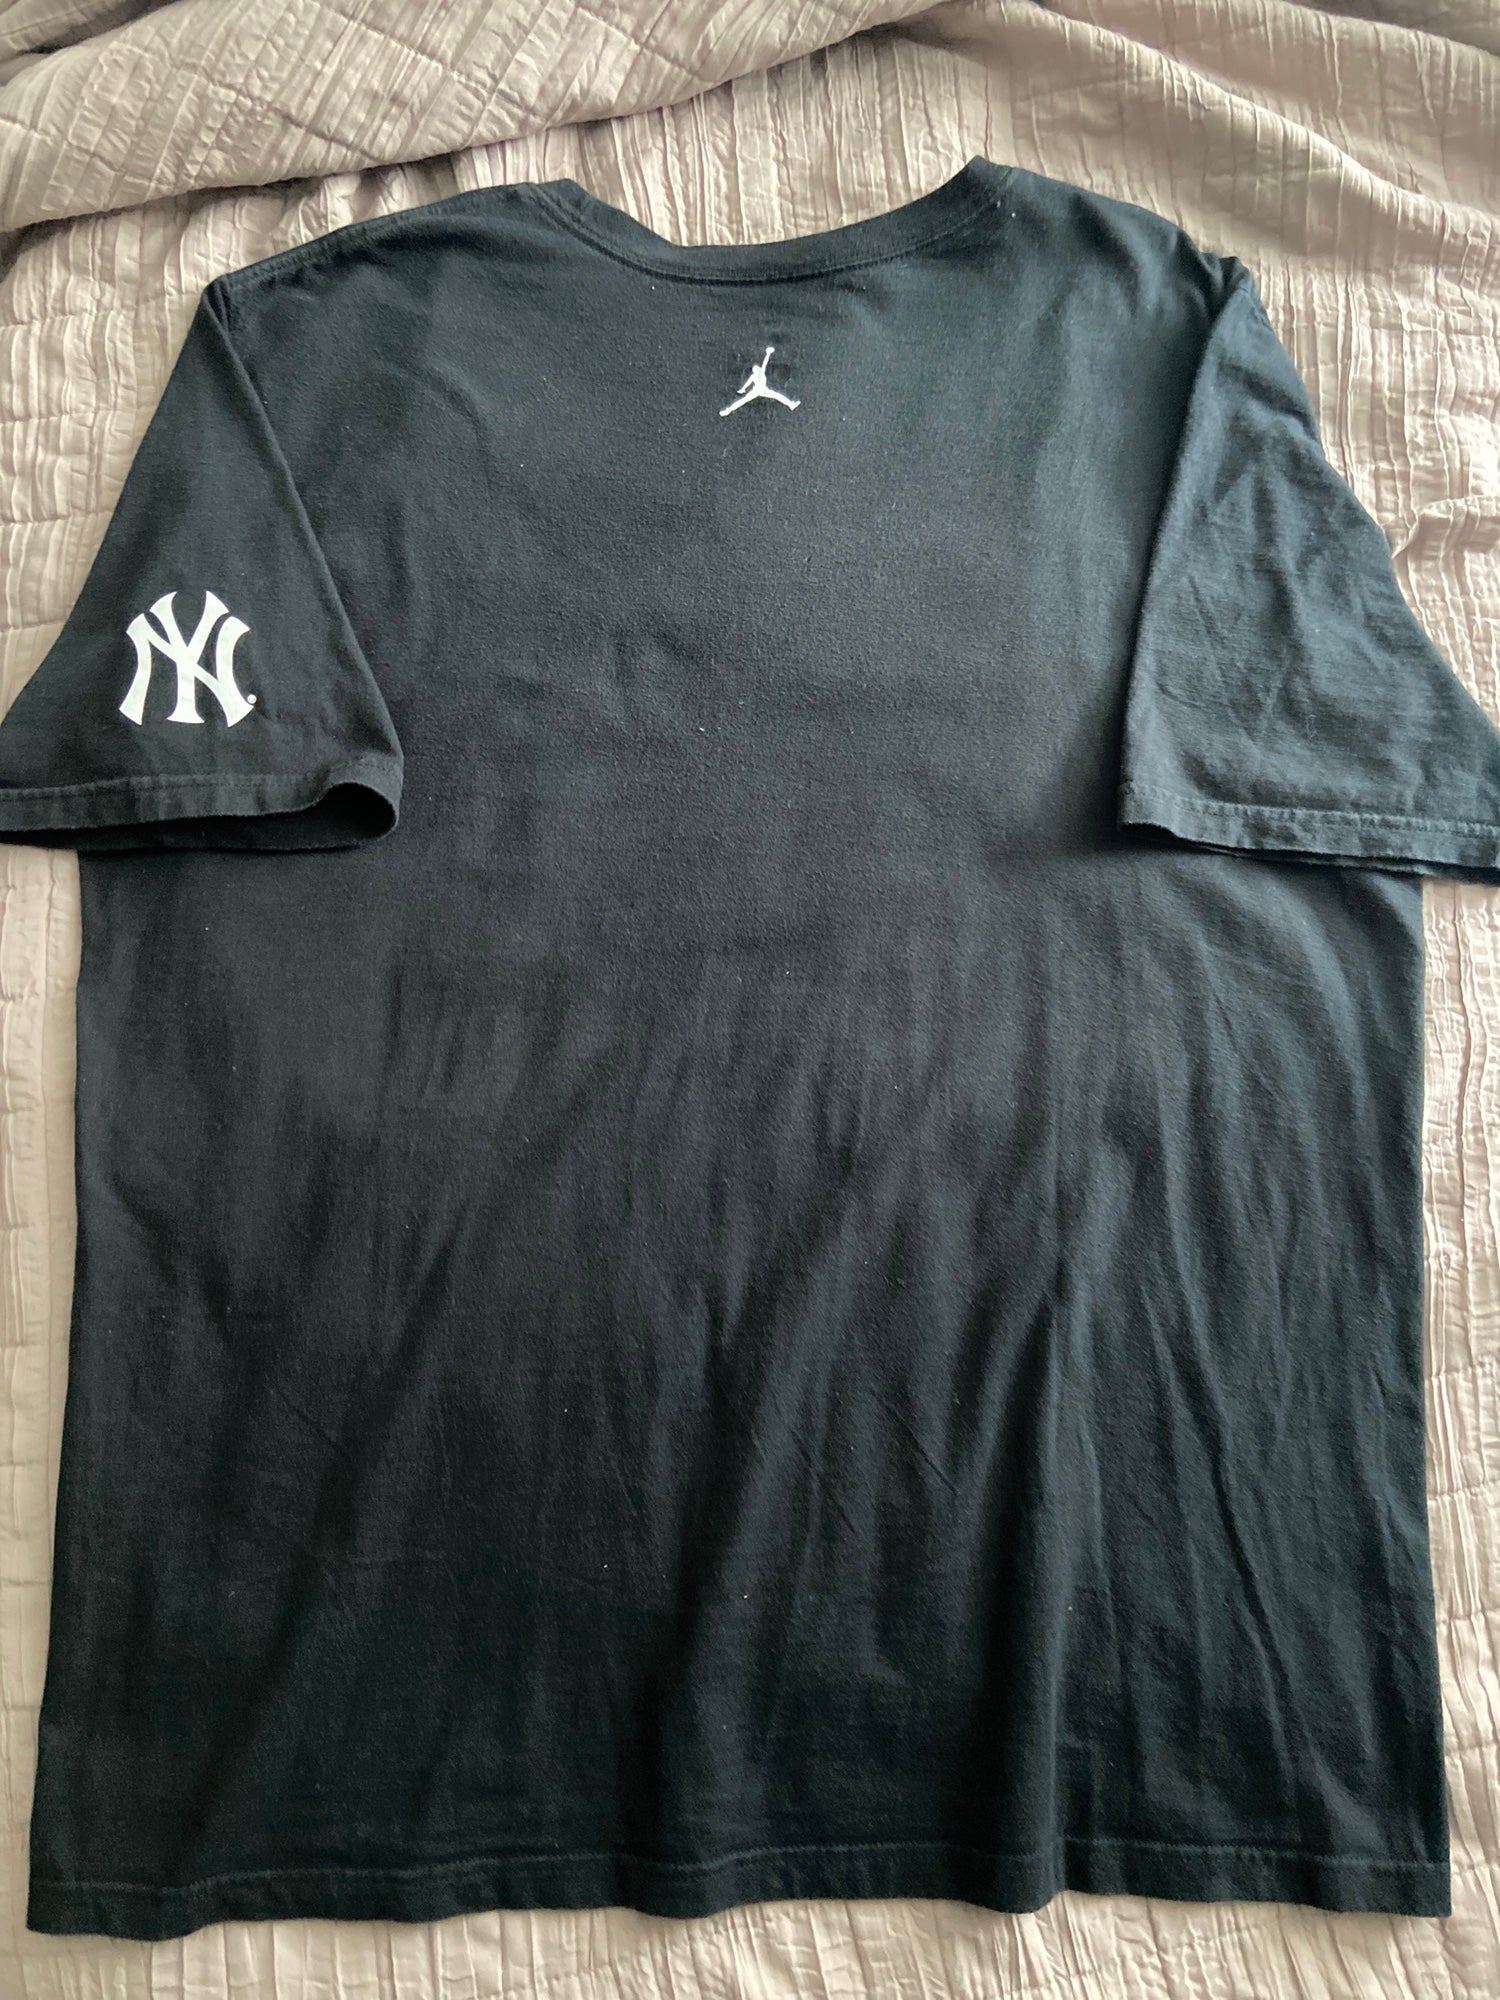 Derek Jeter New York Yankees Respect Club T Shirt